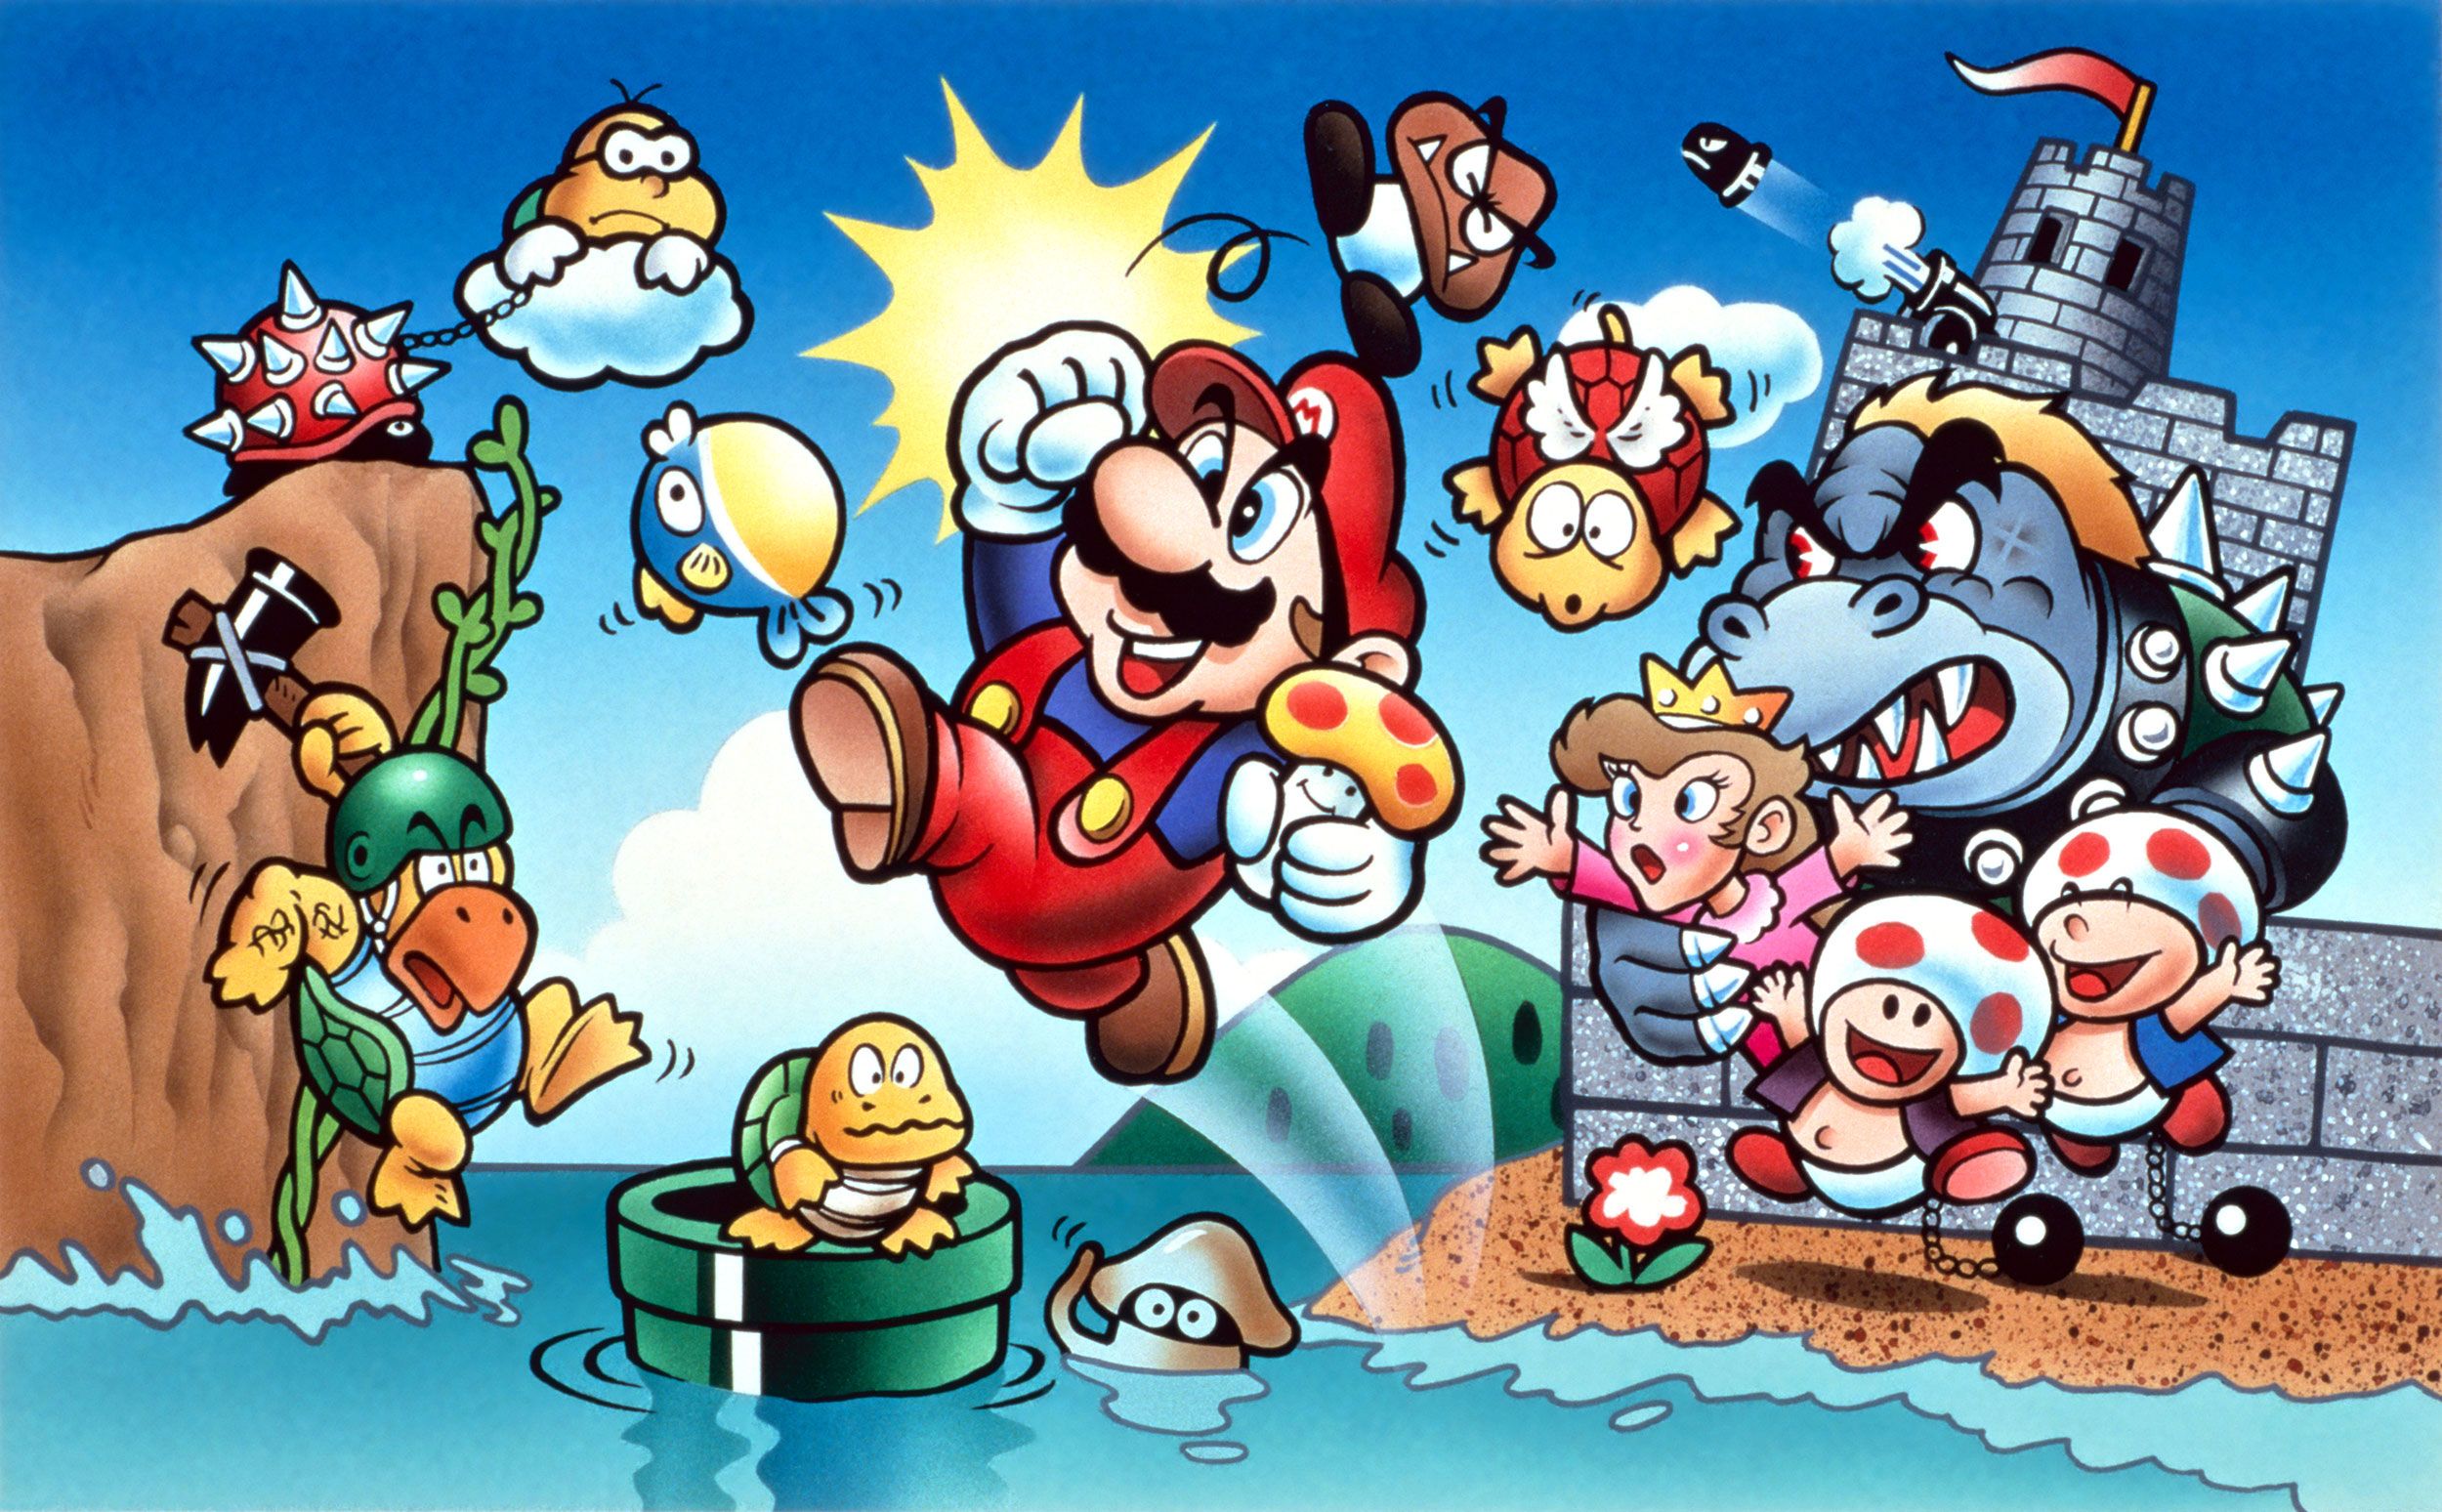 Super Mario Bros Wallpaper, Games / Others: Super Mario Bros, Game